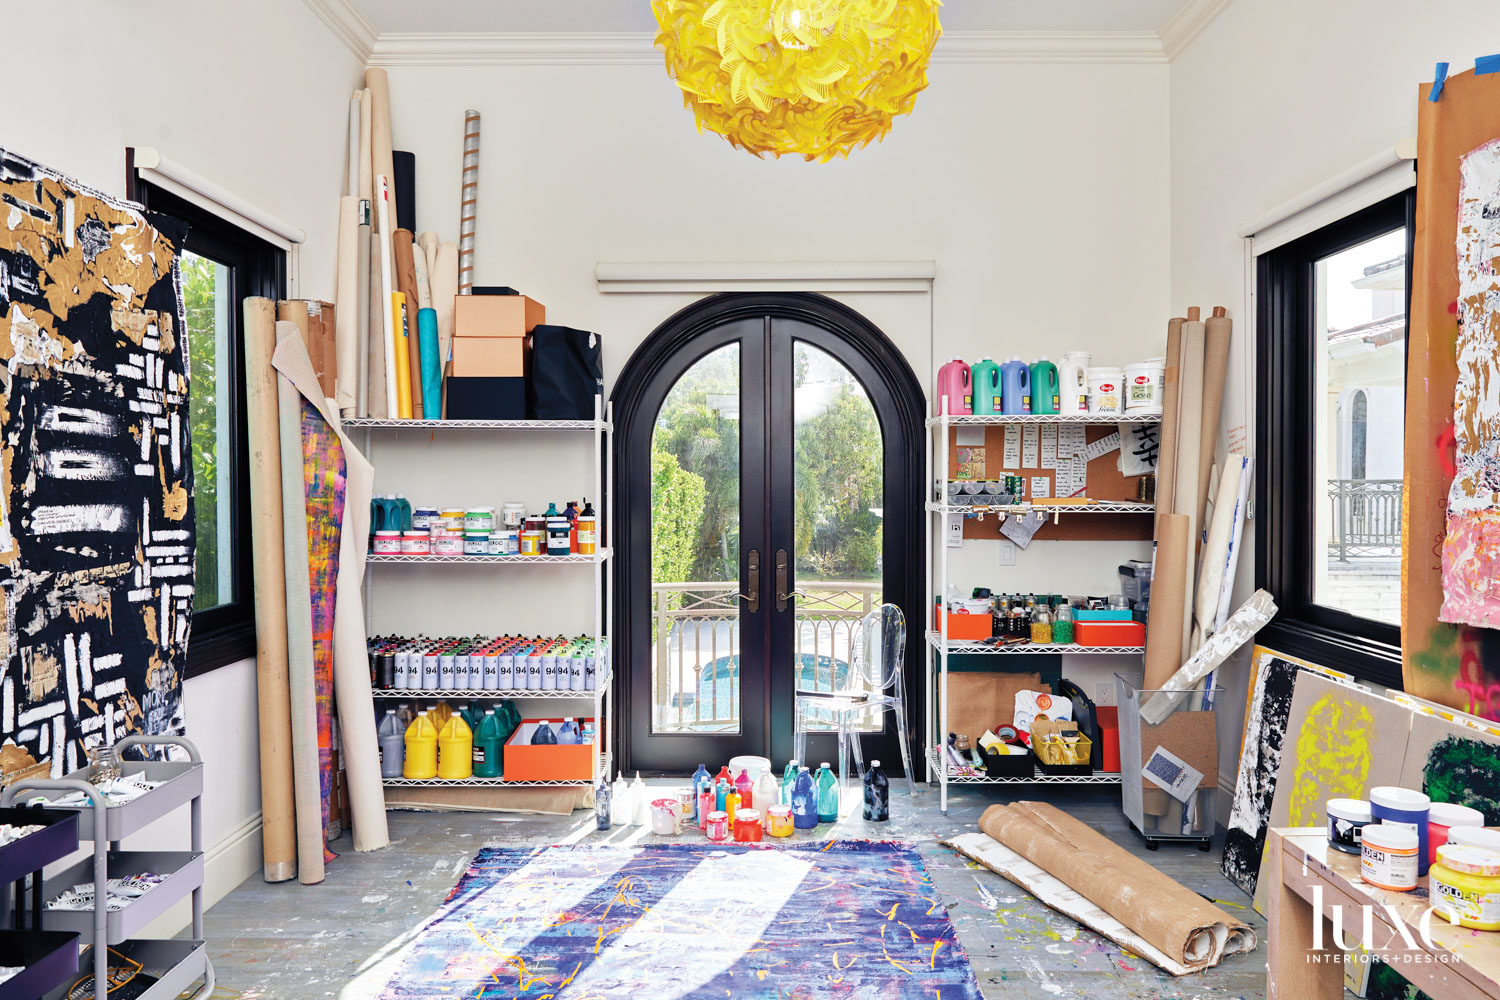 aidan marak's artist studio, with a work on the floor, arched doorway and yellow chandelier above